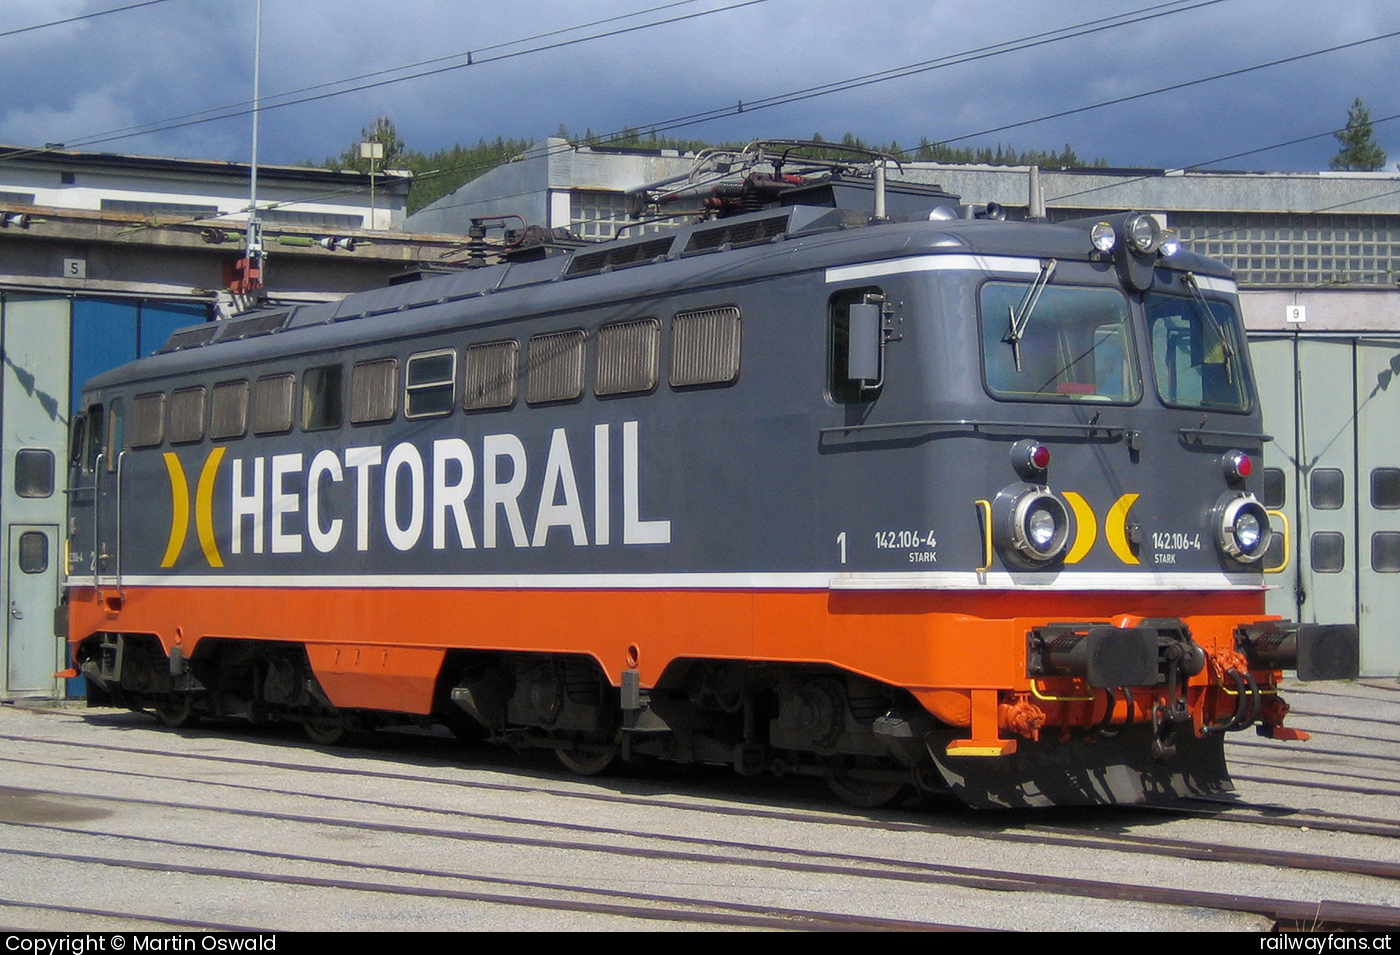 Hectorrail 142 106 in Ånge - ex ÖBB 1142 563   Railwayfans